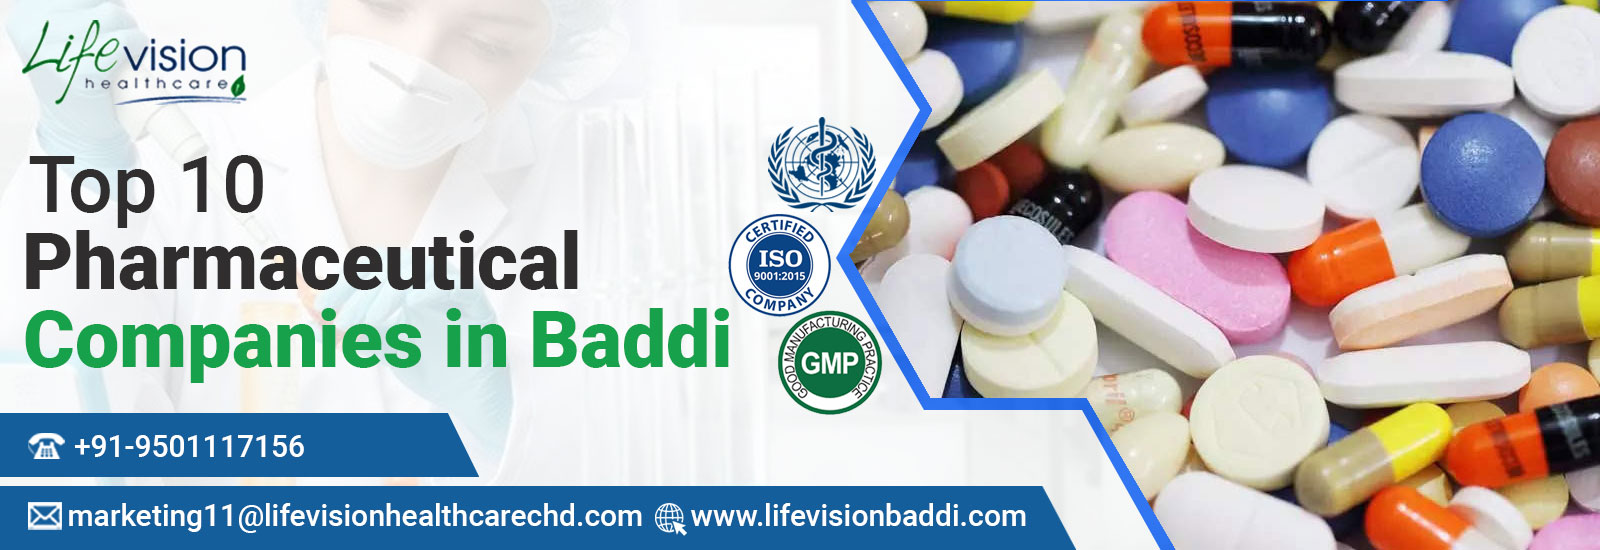 Top 10 pharma companies in Baddi